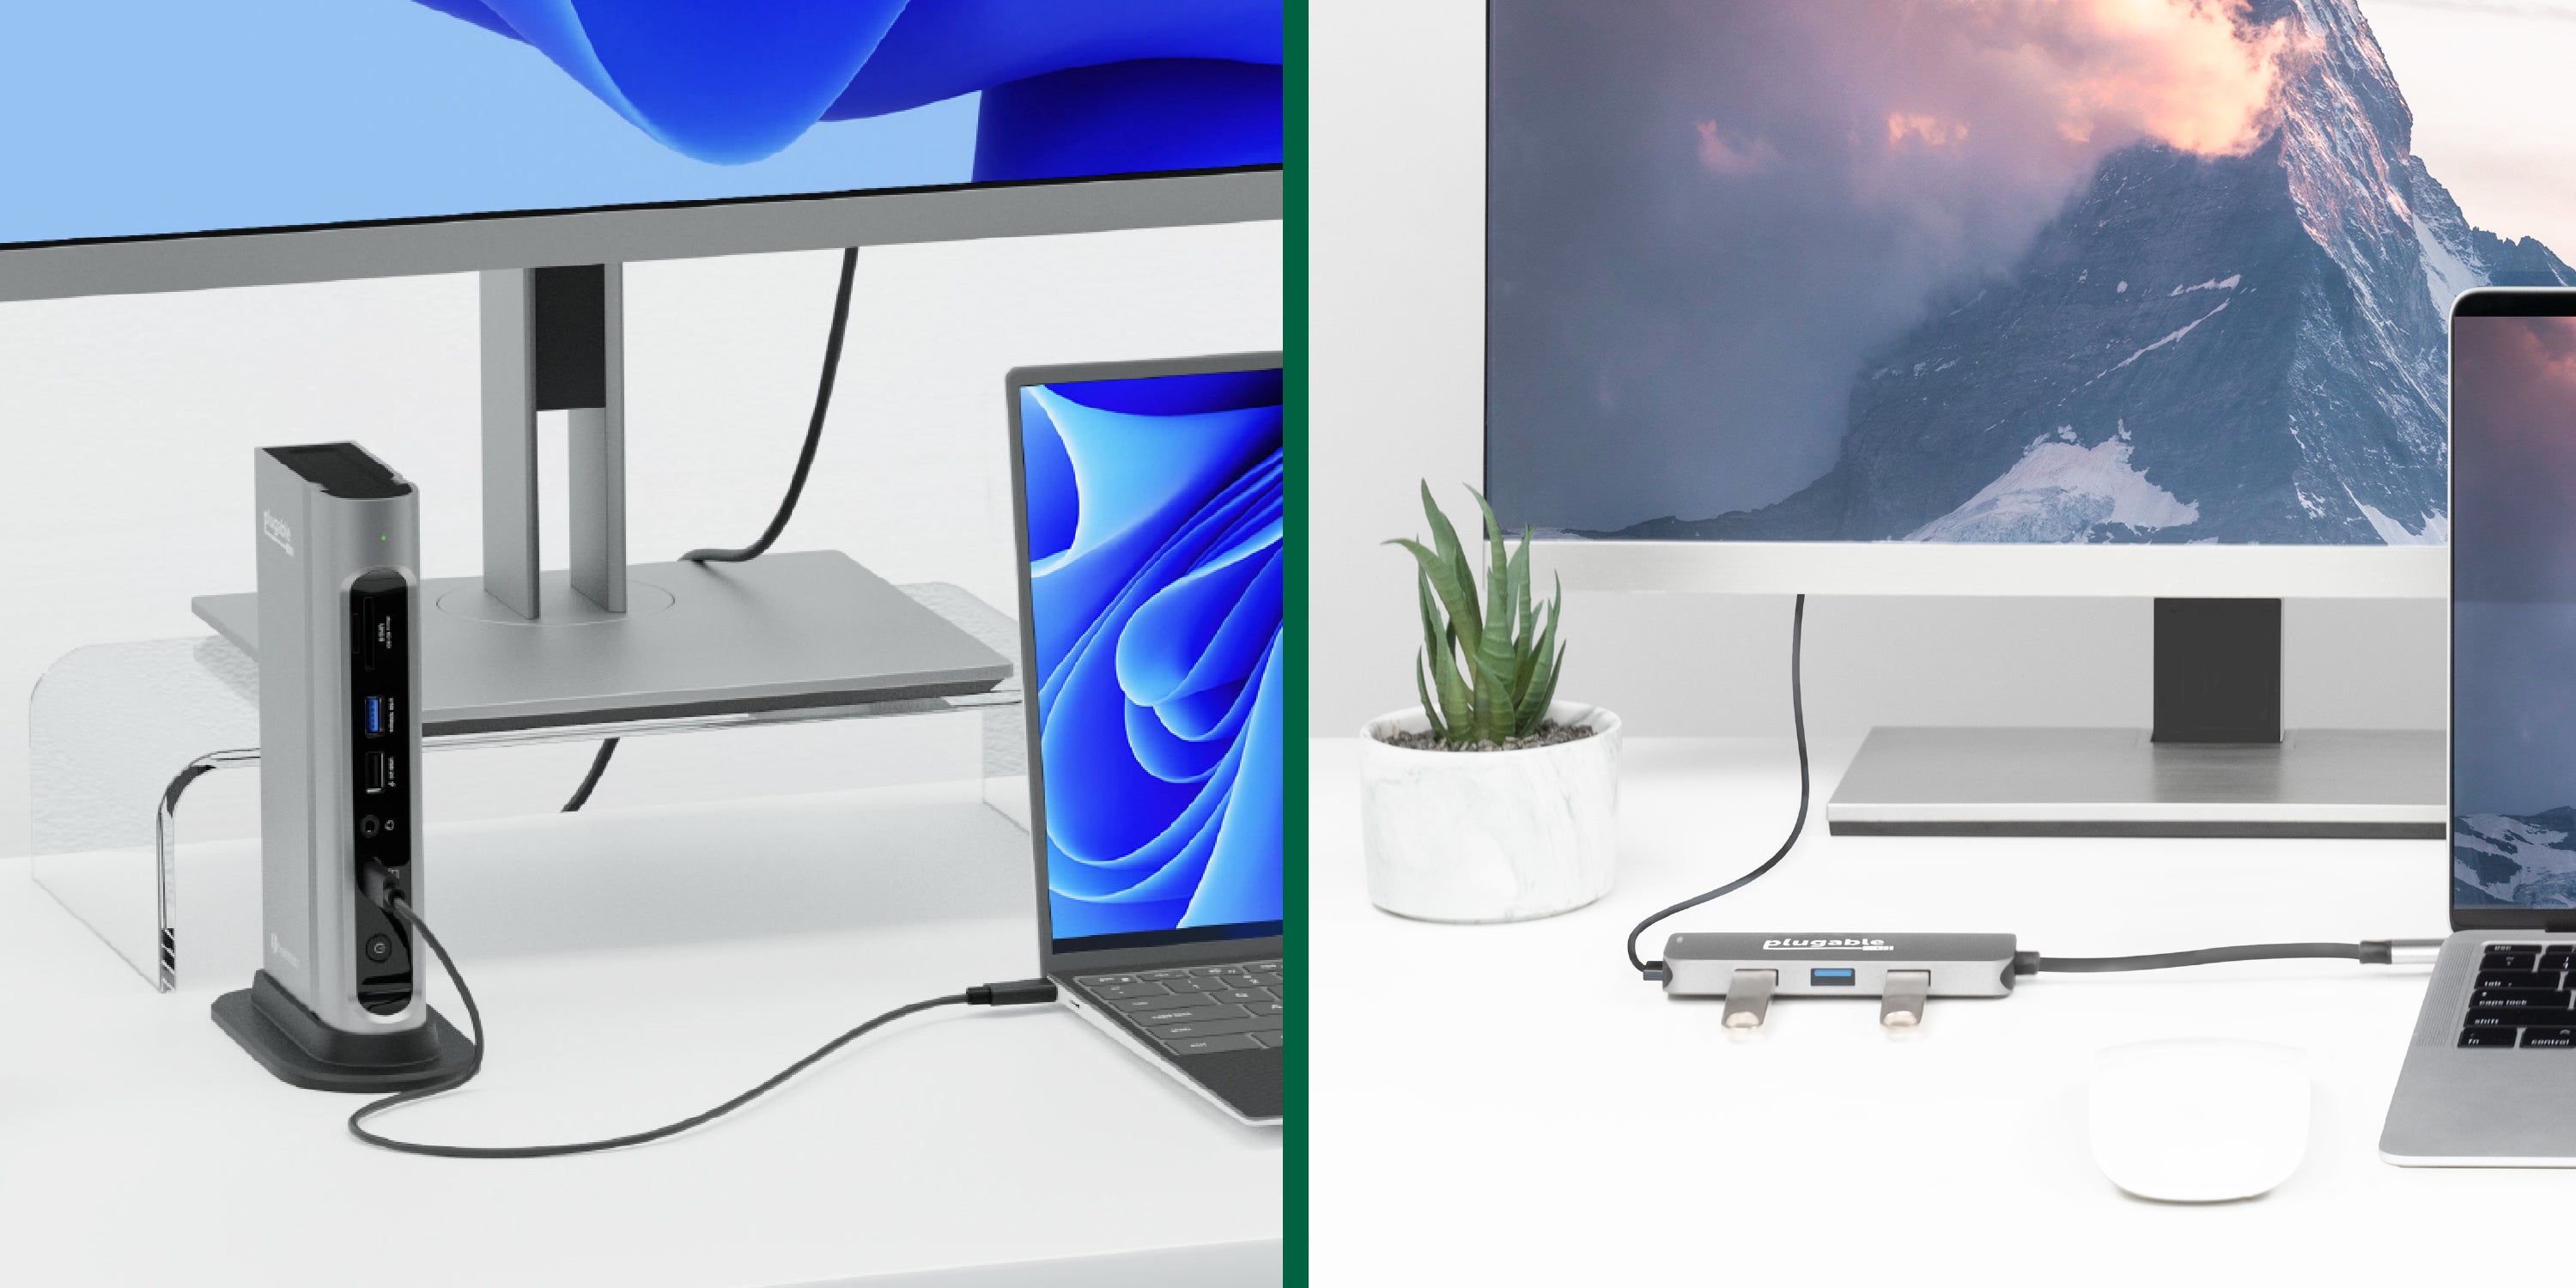 USB Docking Station vs. Thunderbolt Docking Station: What's the